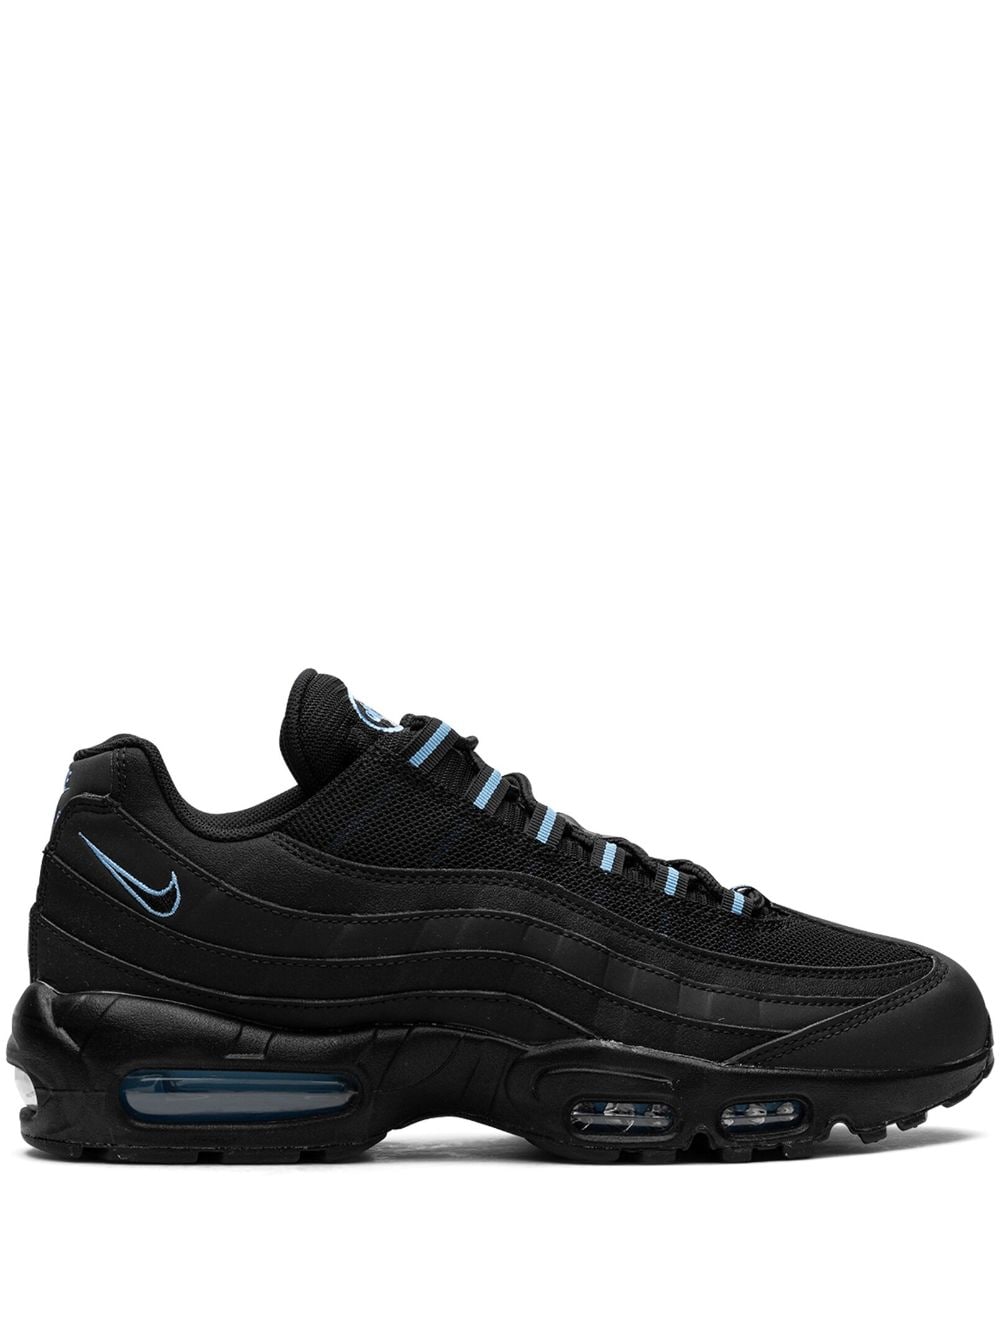 Image 1 of Nike Air Max 95 "Black/University Blue" sneakers